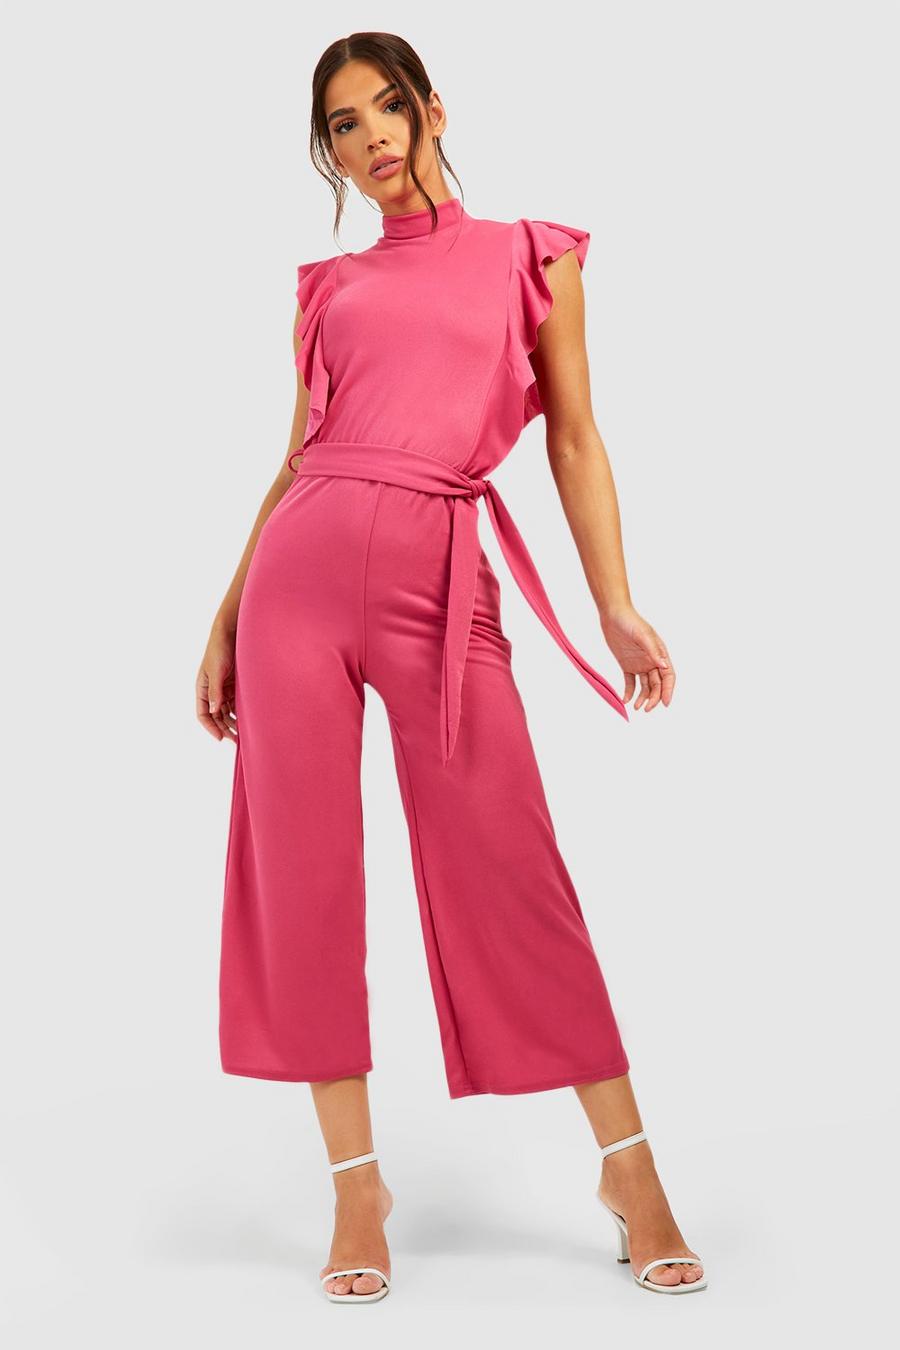 Hot pink High Neck Frill Detail Belted Culotte Jumpsuit